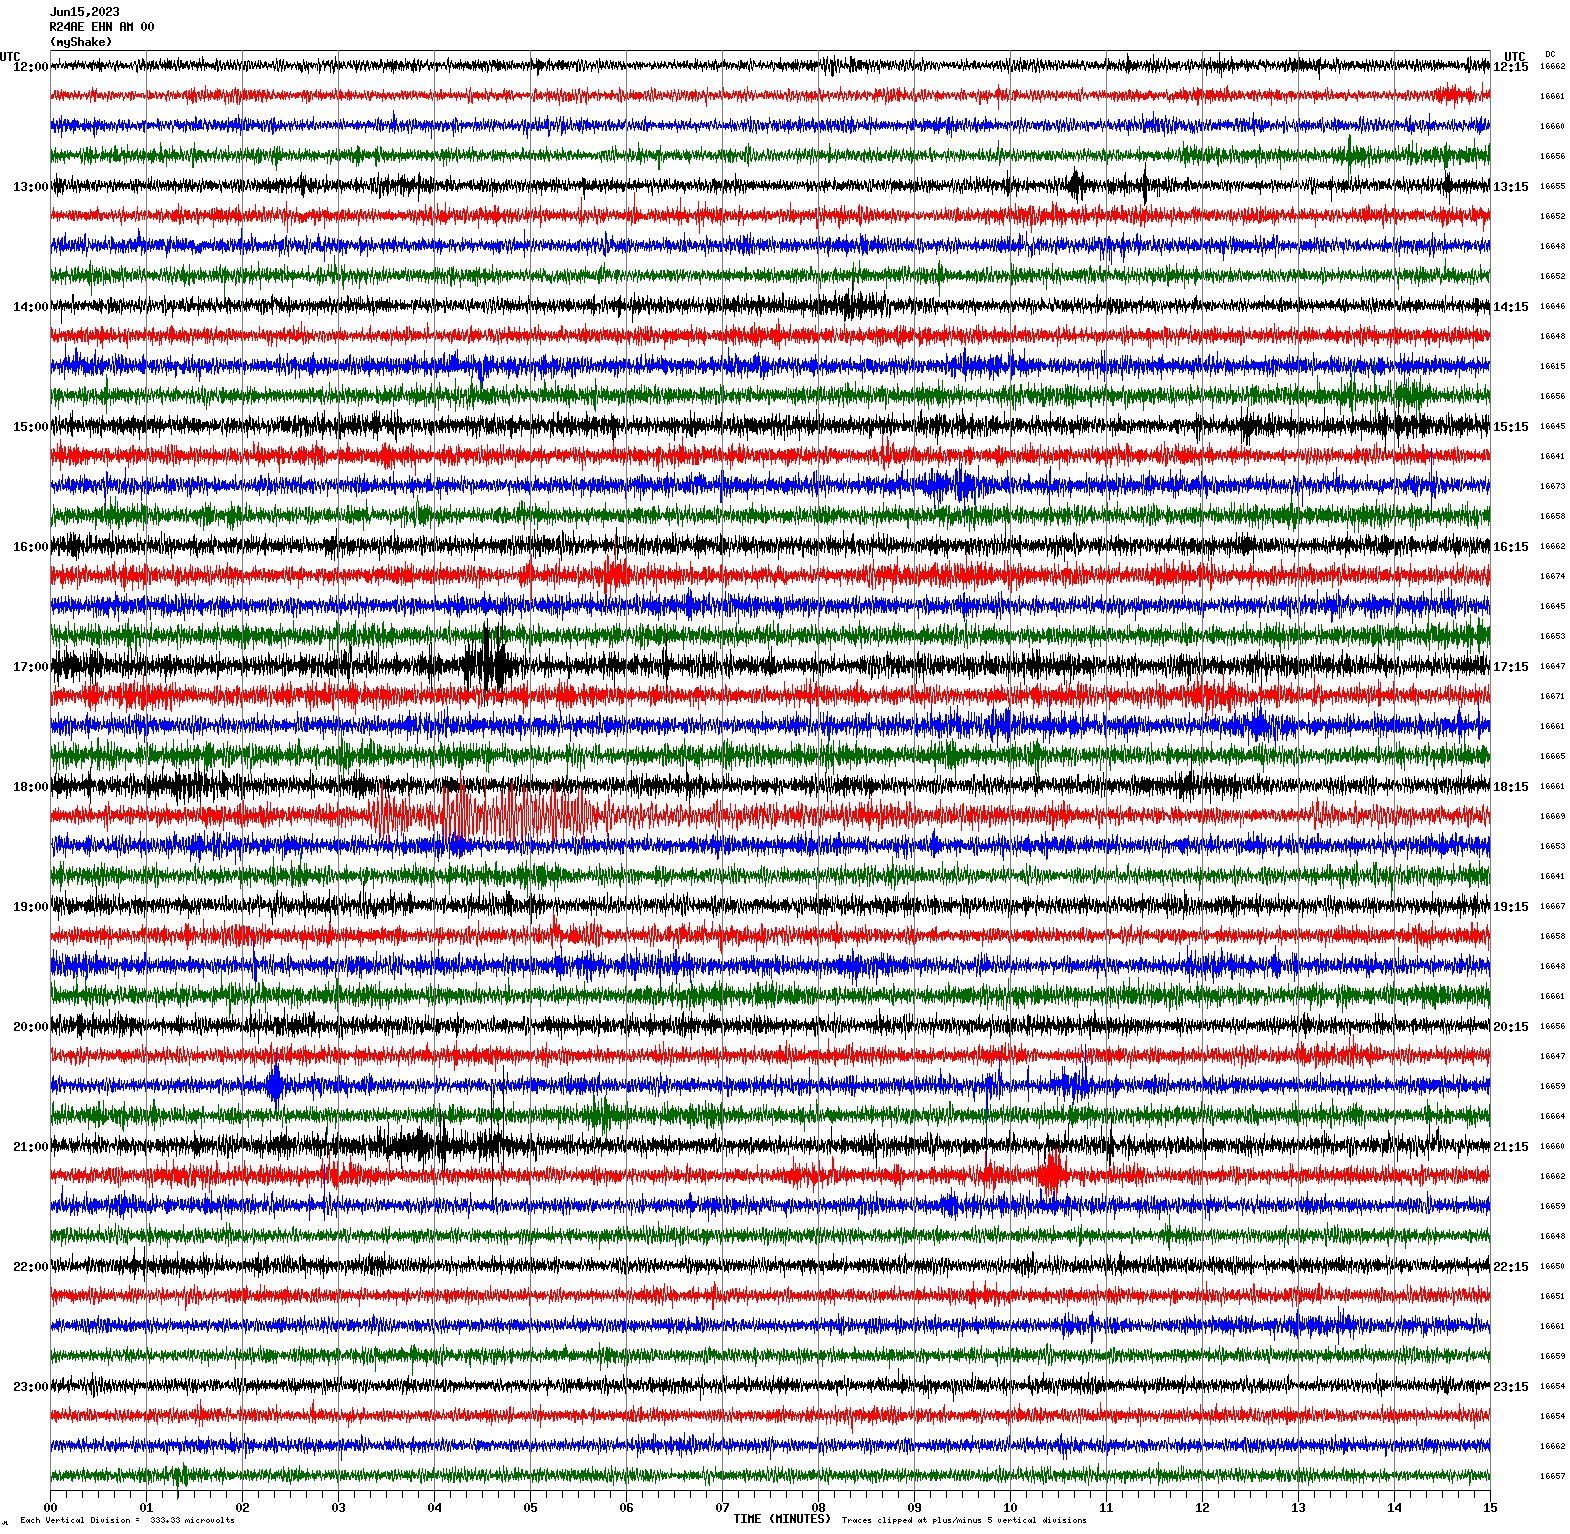 /seismic-data/R24AE/R24AE_EHN_AM_00.2023061512.gif